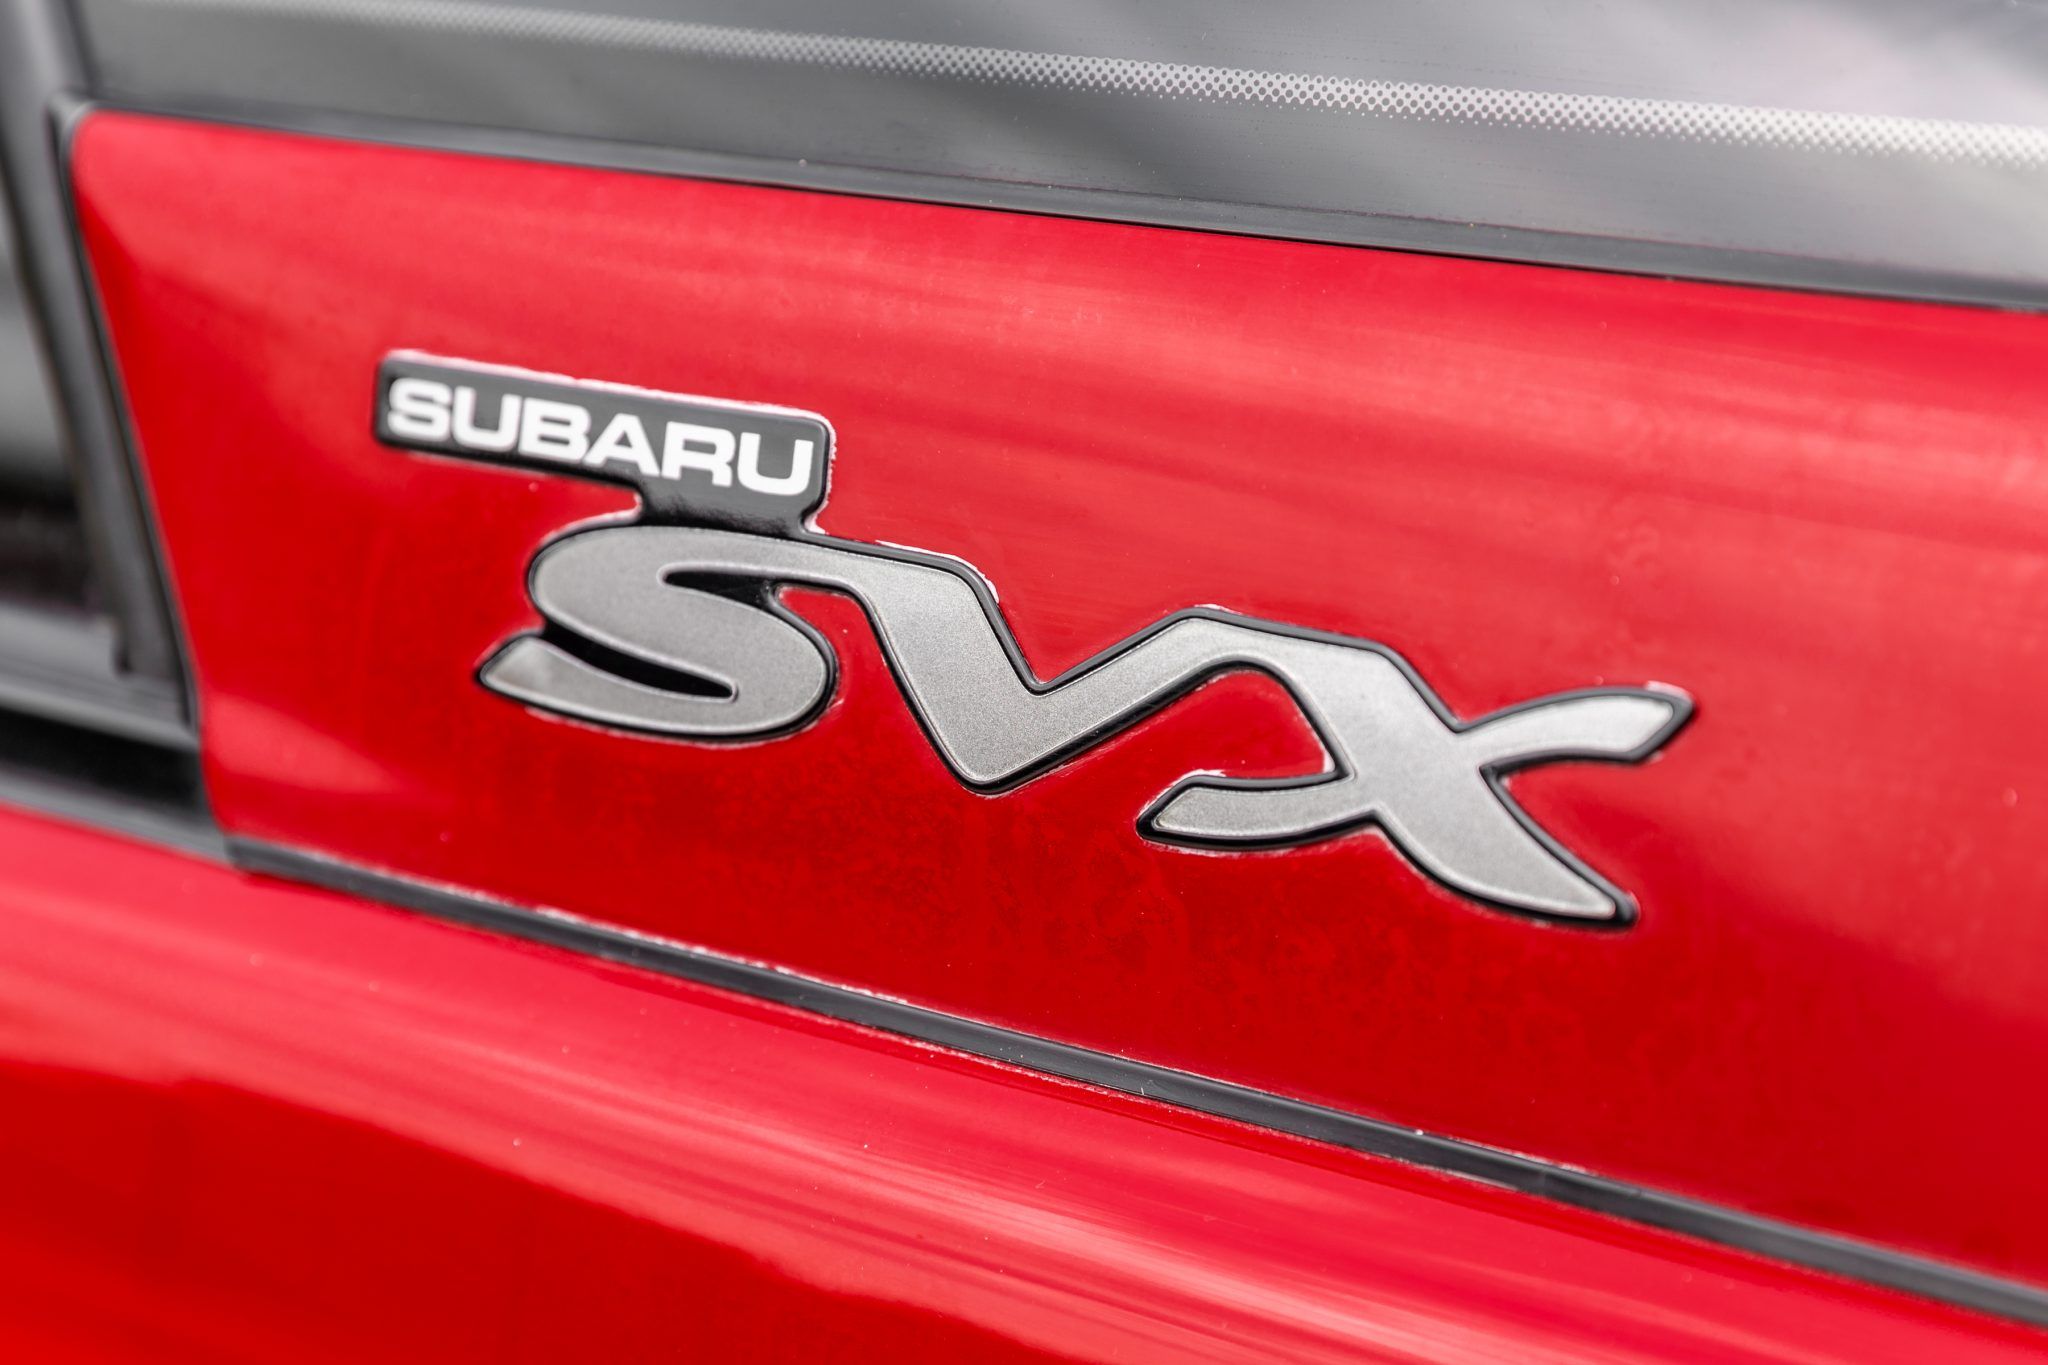 Subaru SVX badge